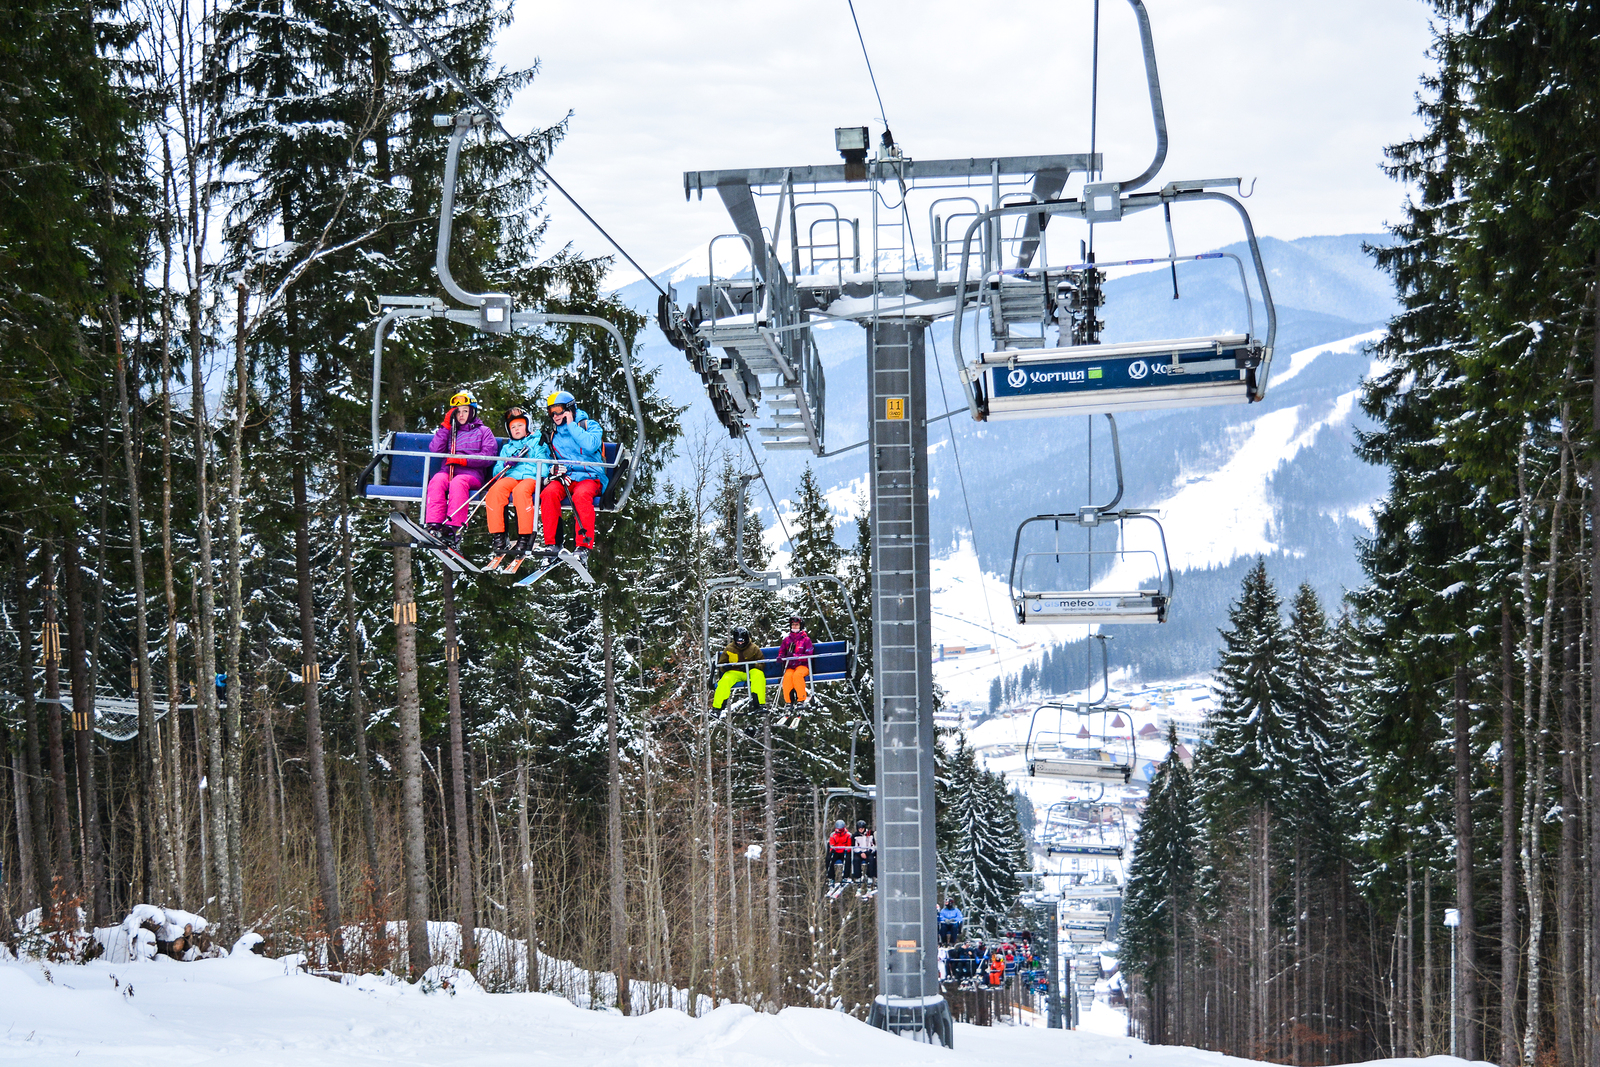 Will emerging Europe get a ski season this winter?